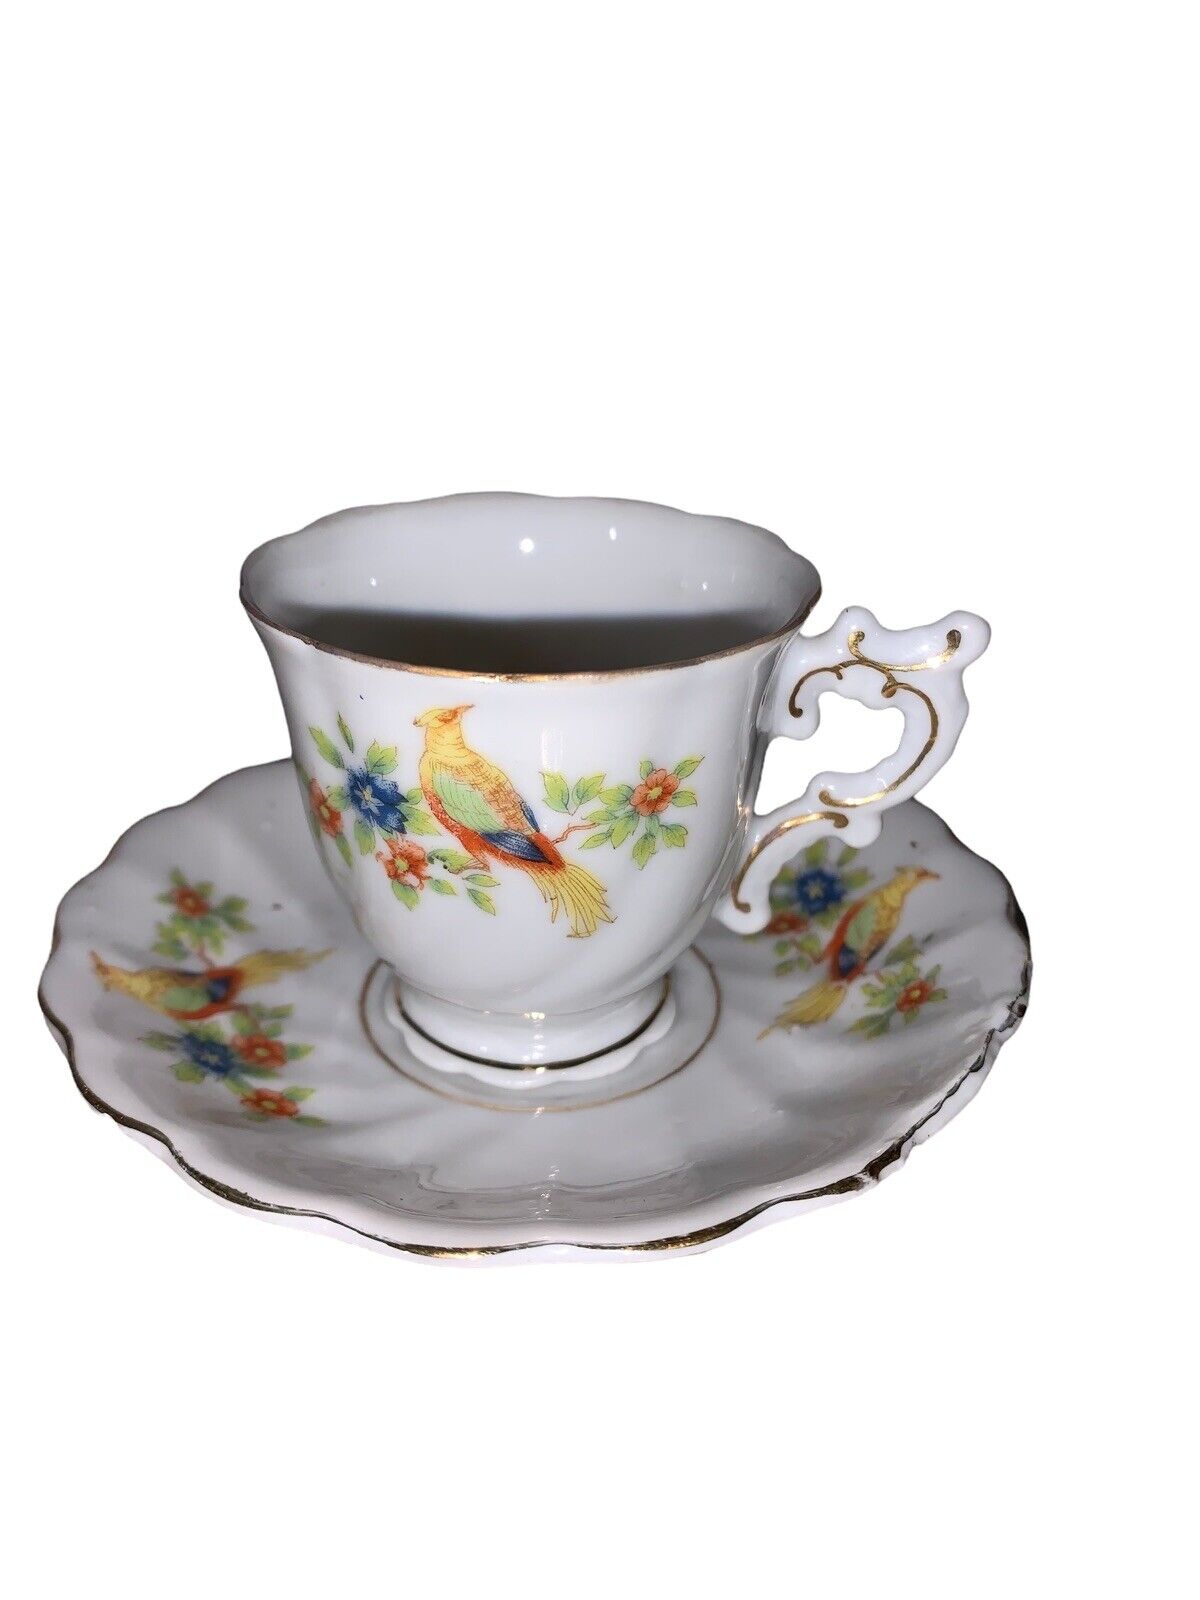 Demitasse Porcelain Tea Cup & Saucer Set, Colorful Bird & Flowers, Made in Japan